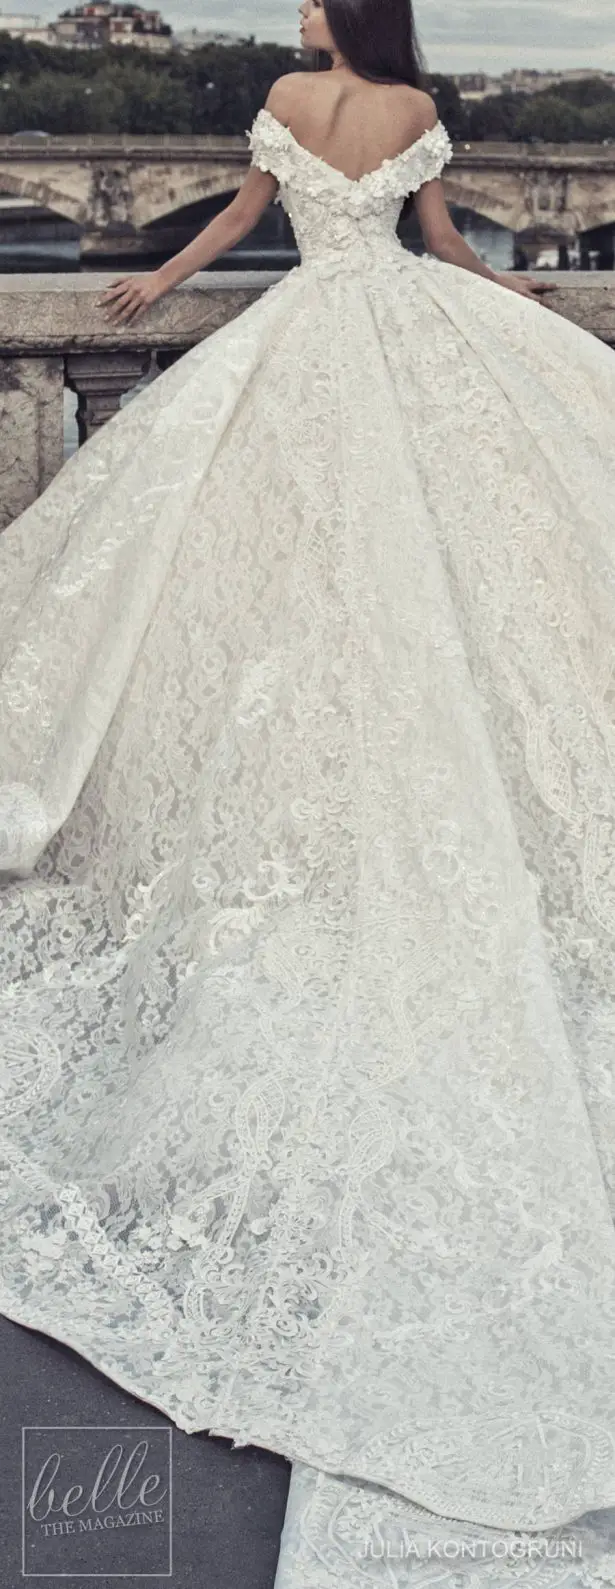 Julia Kontogruni Wedding Dress Collection